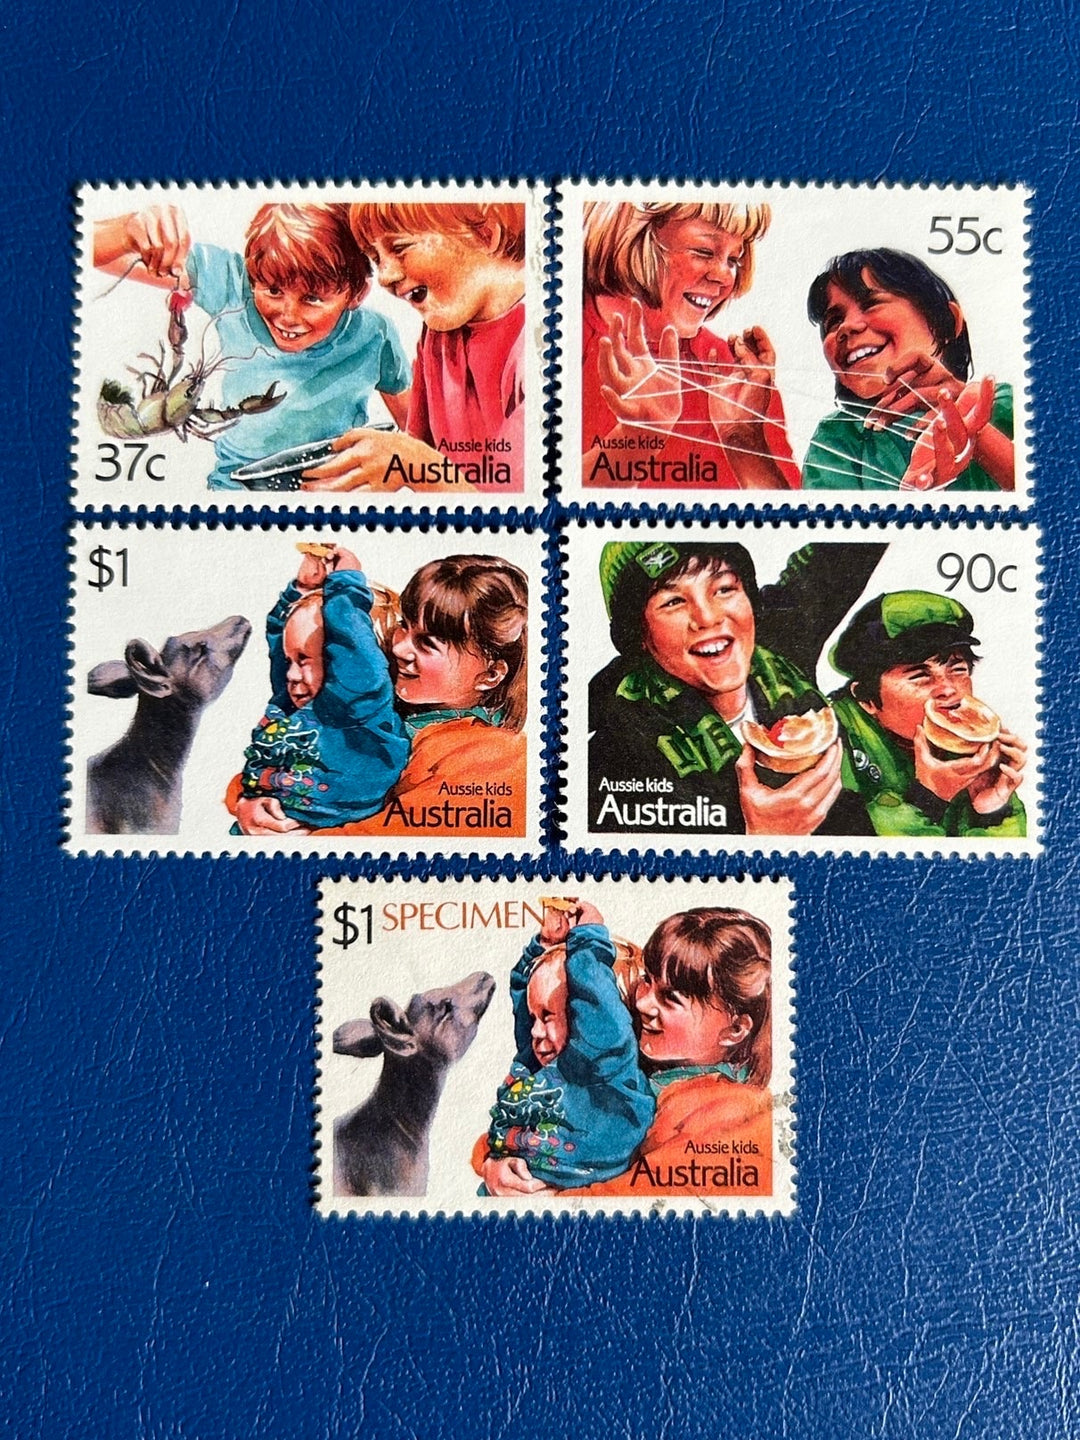 Australia - Original Vintage Postage Stamps - 1988 - Australian Children - for the collector, artist or crafter